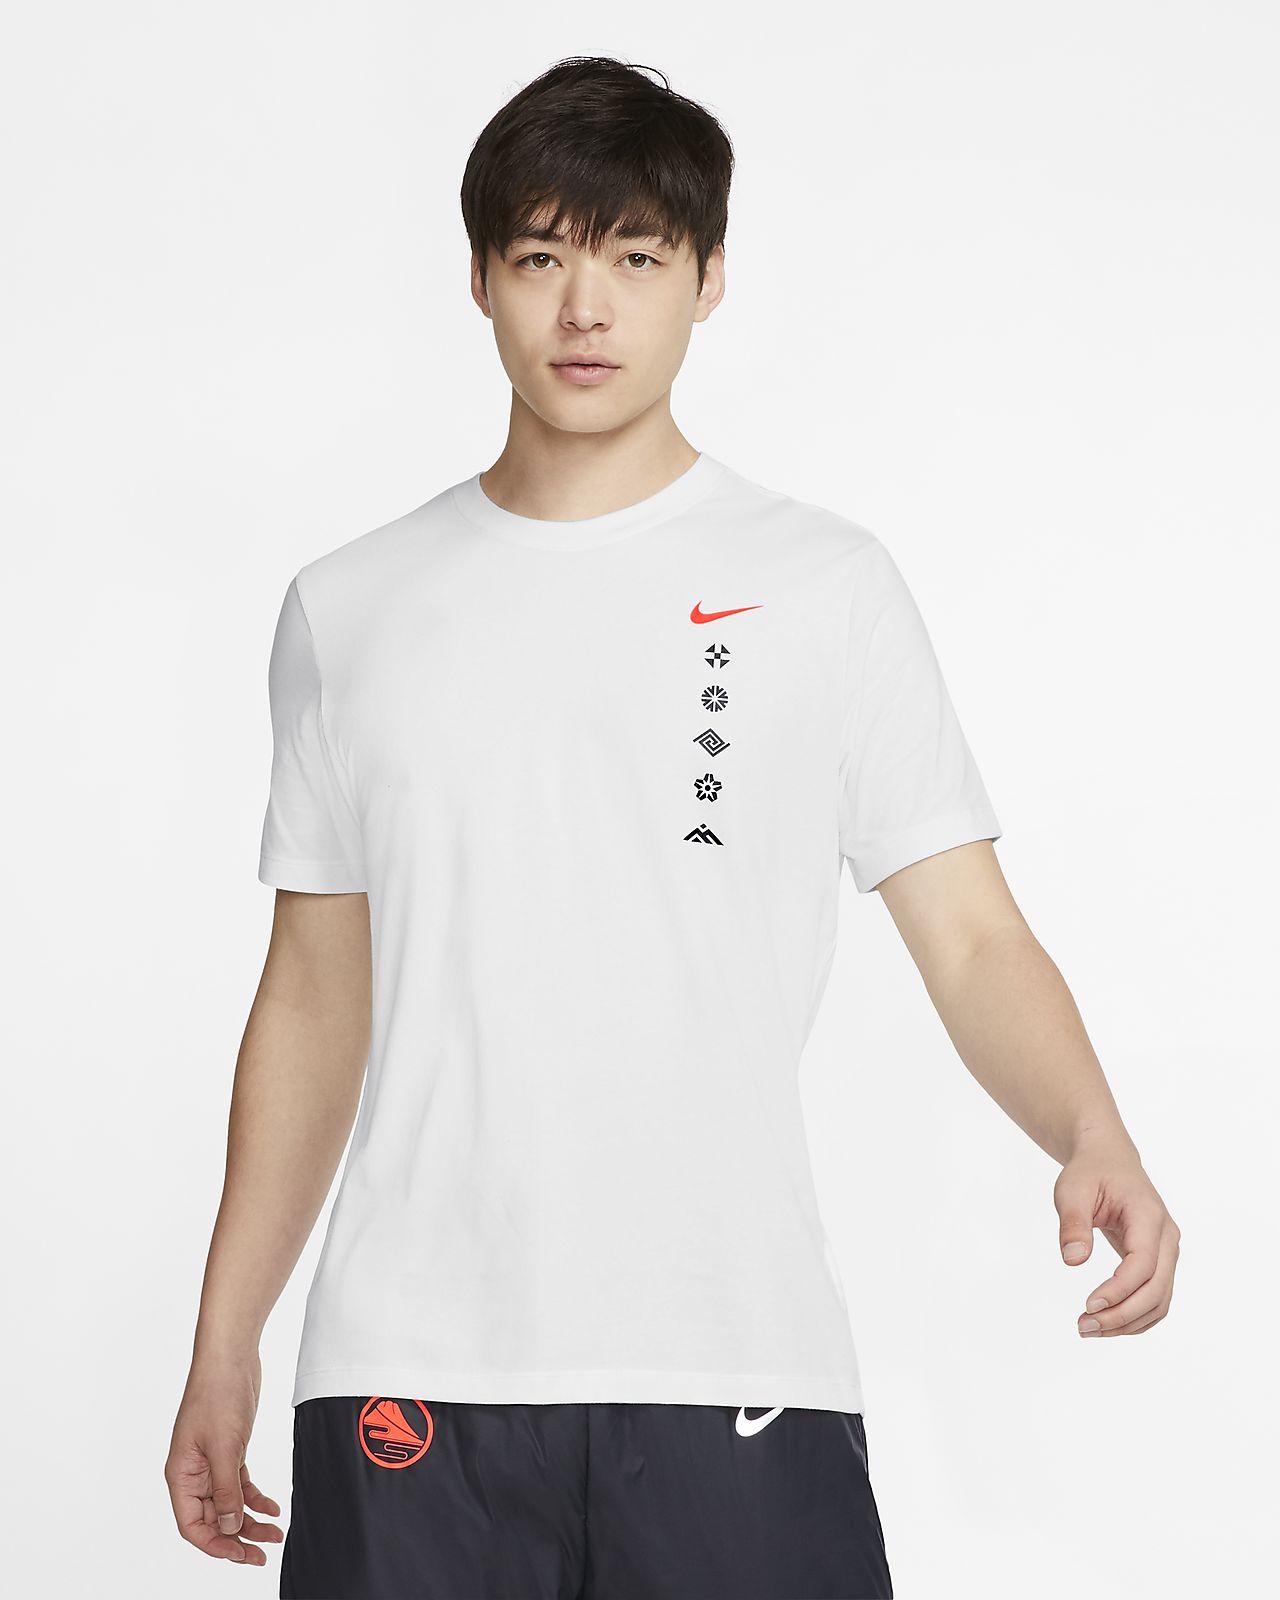 Nike Official Nike Dri Fit Men S Running T Shirt Online Store